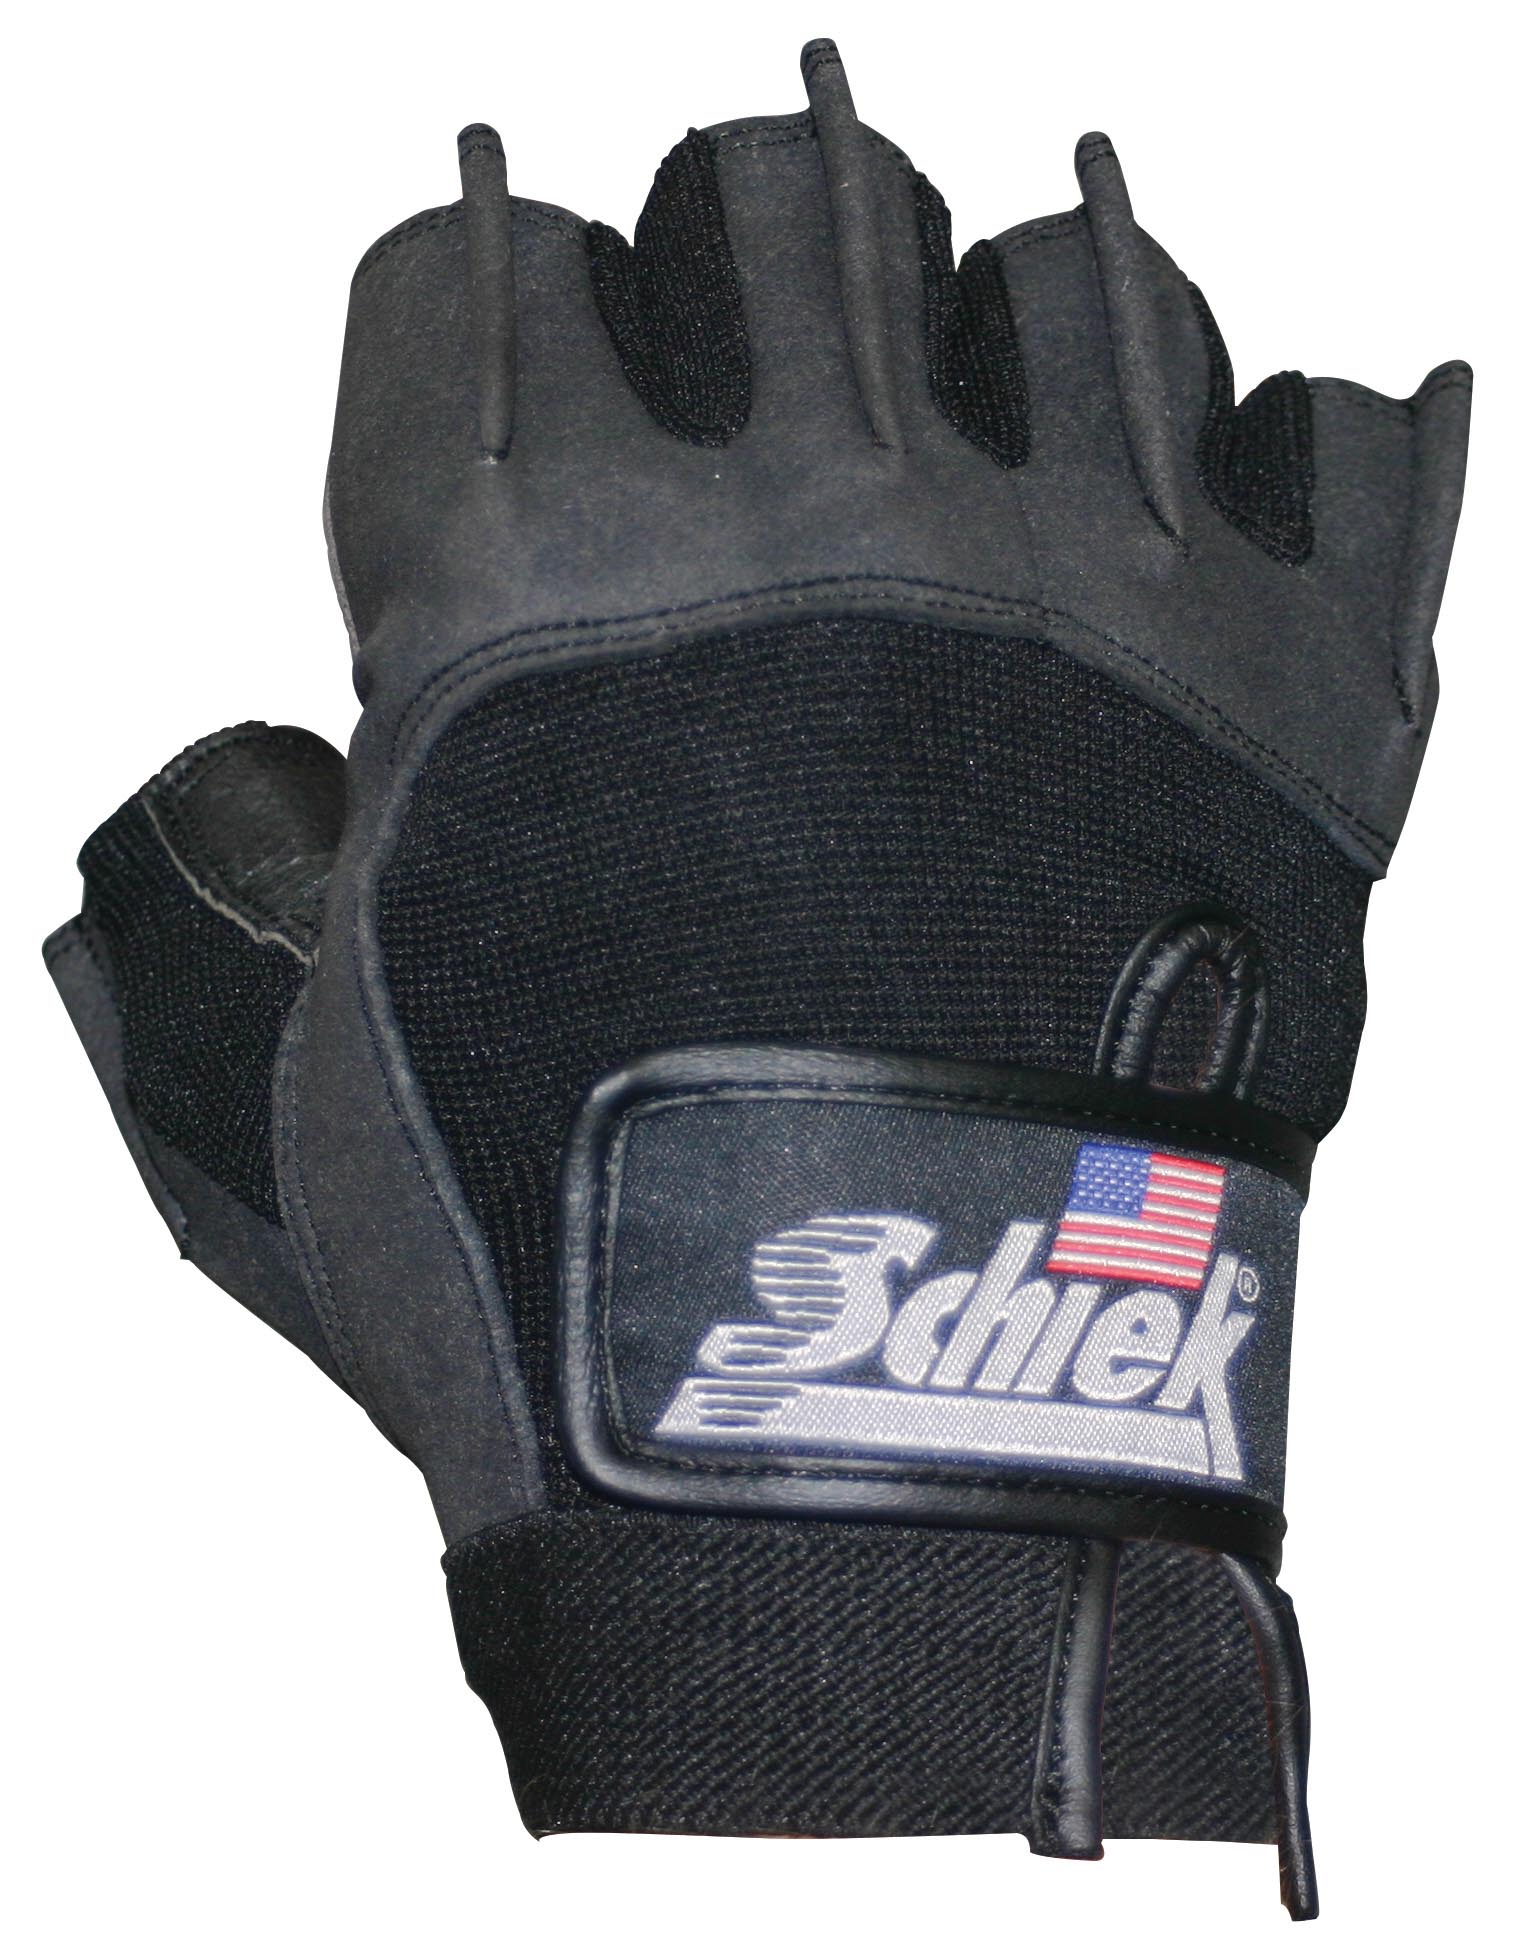 Schiek 715 Premium Lifting Gloves